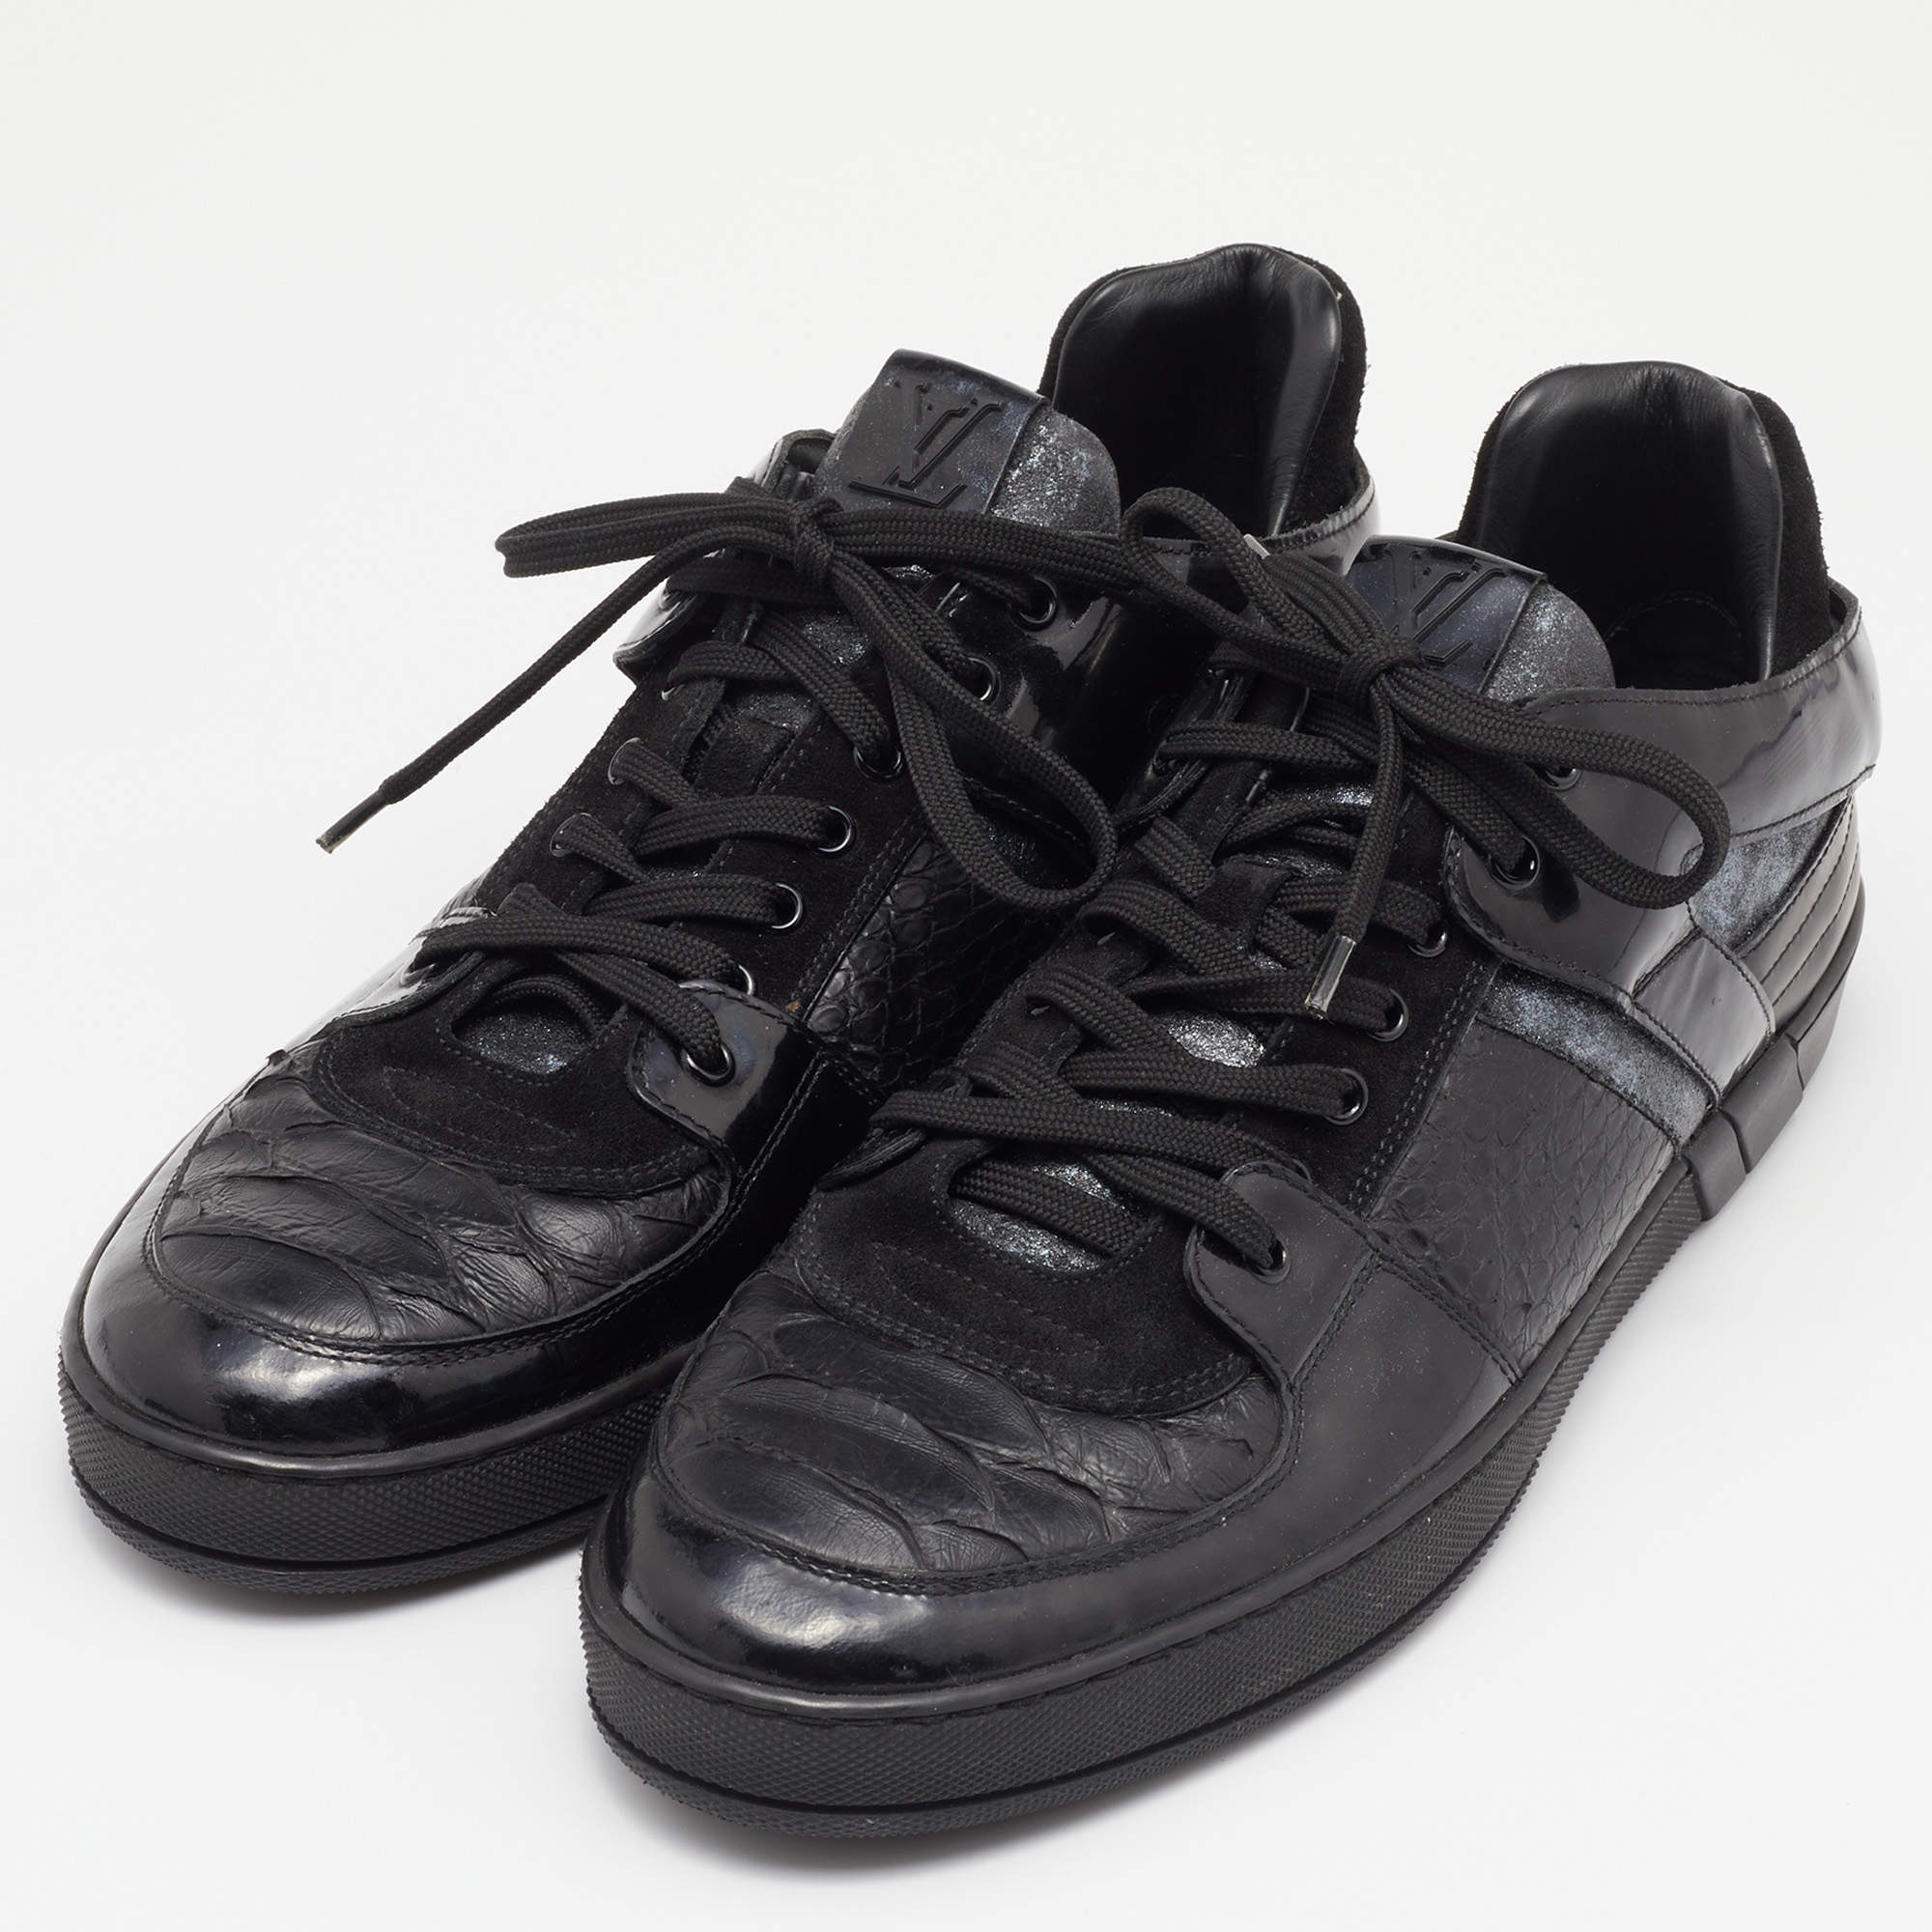 Louis Vuitton Beige/Brown Python Low Top Sneakers Size 41 Louis